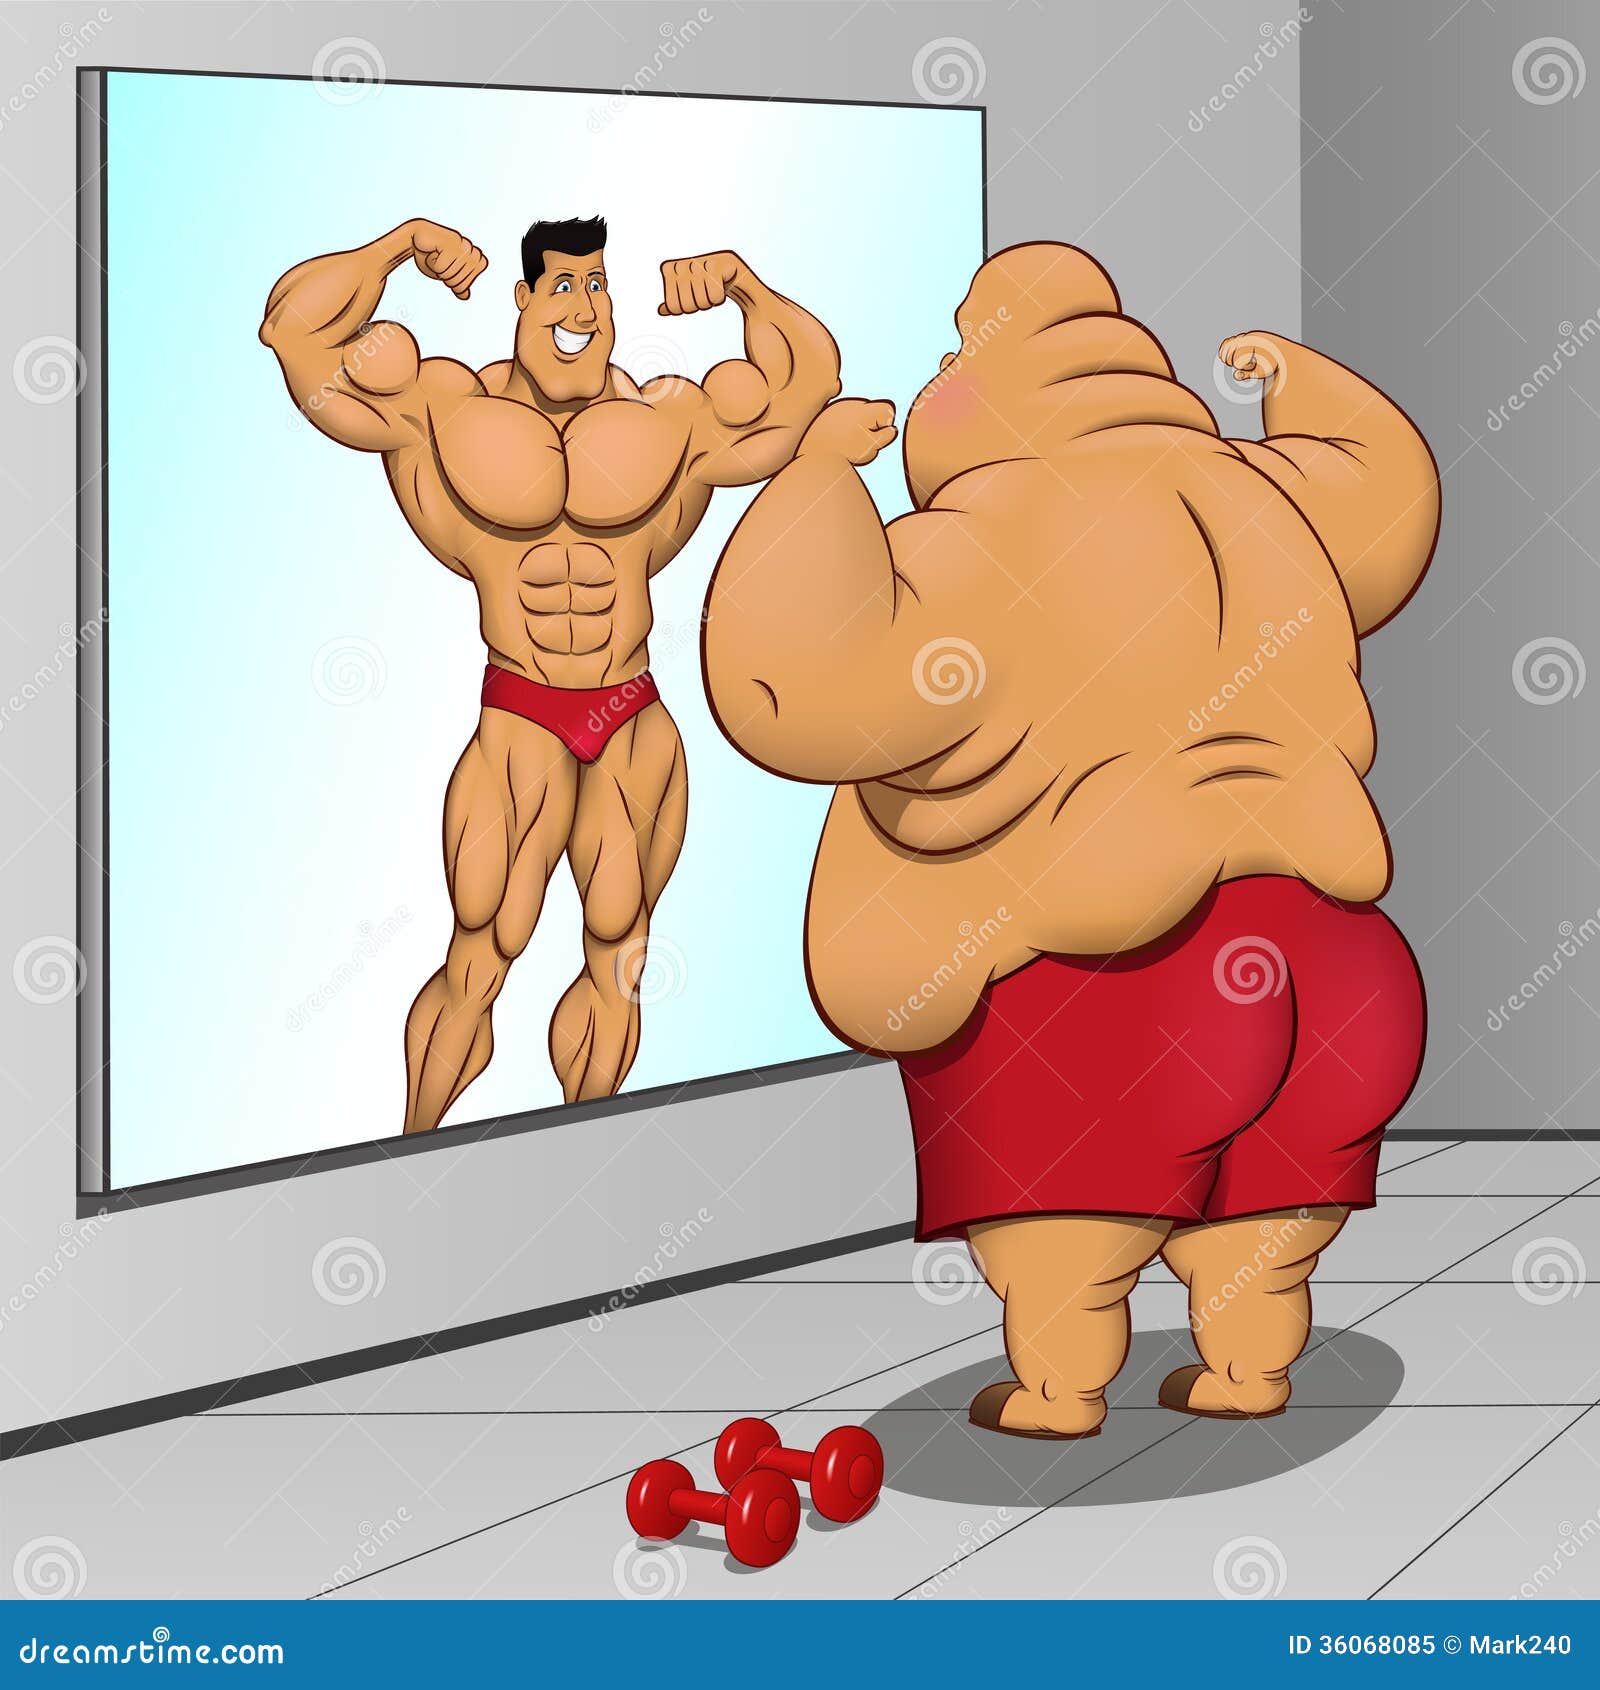 illustration-fat-man-his-reflection-file-eps-format-36068085.jpg